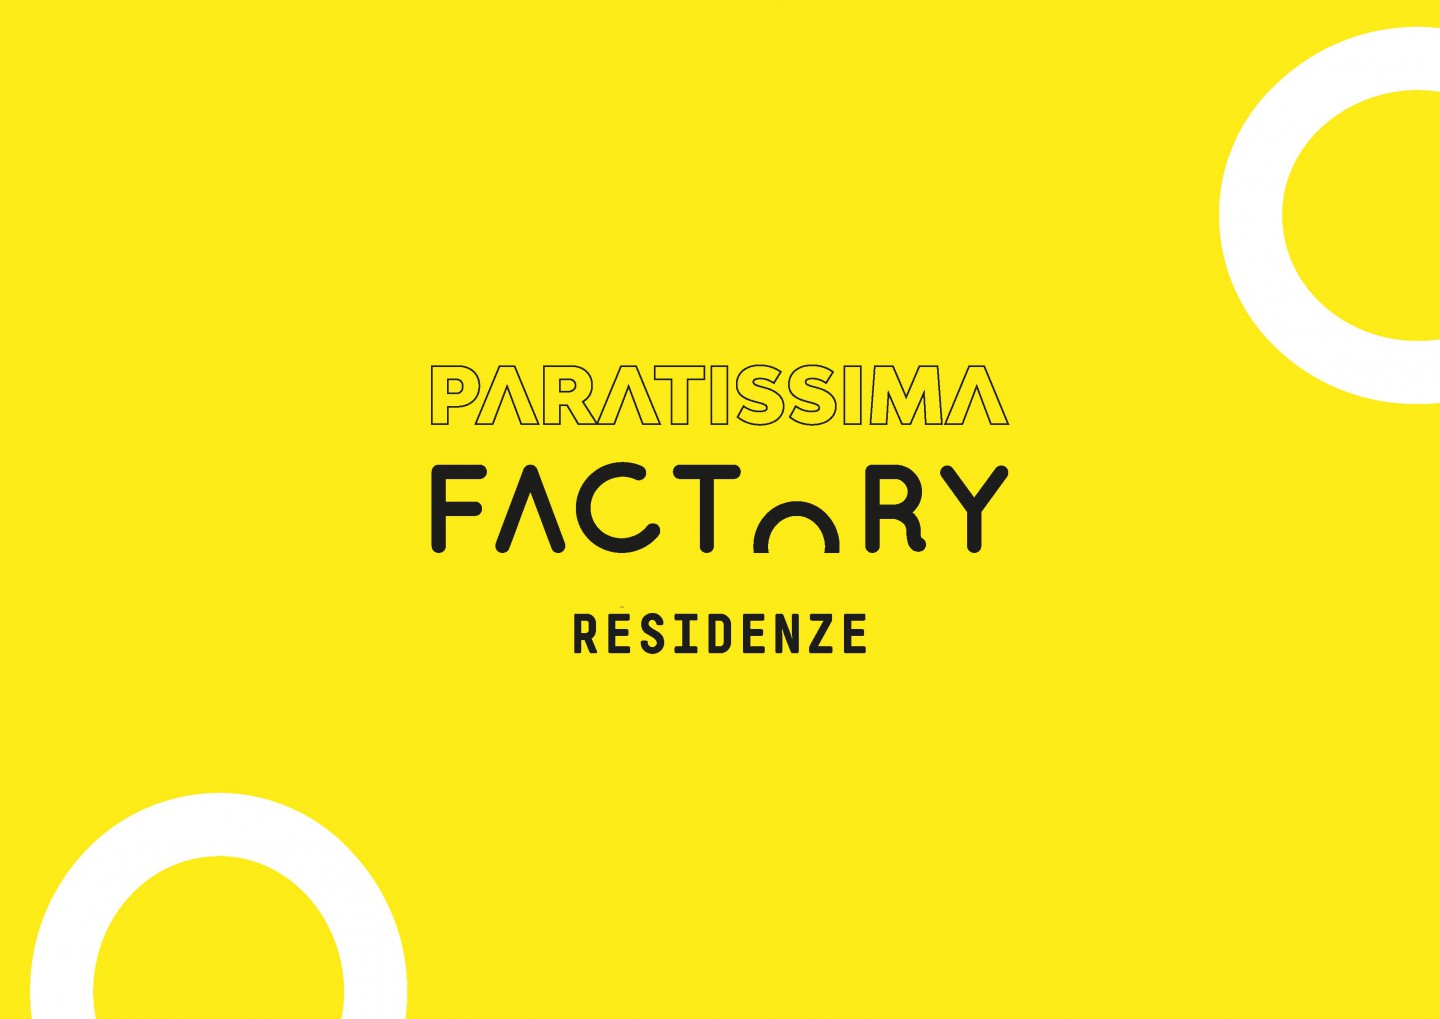 Paratissima Factory residenze web